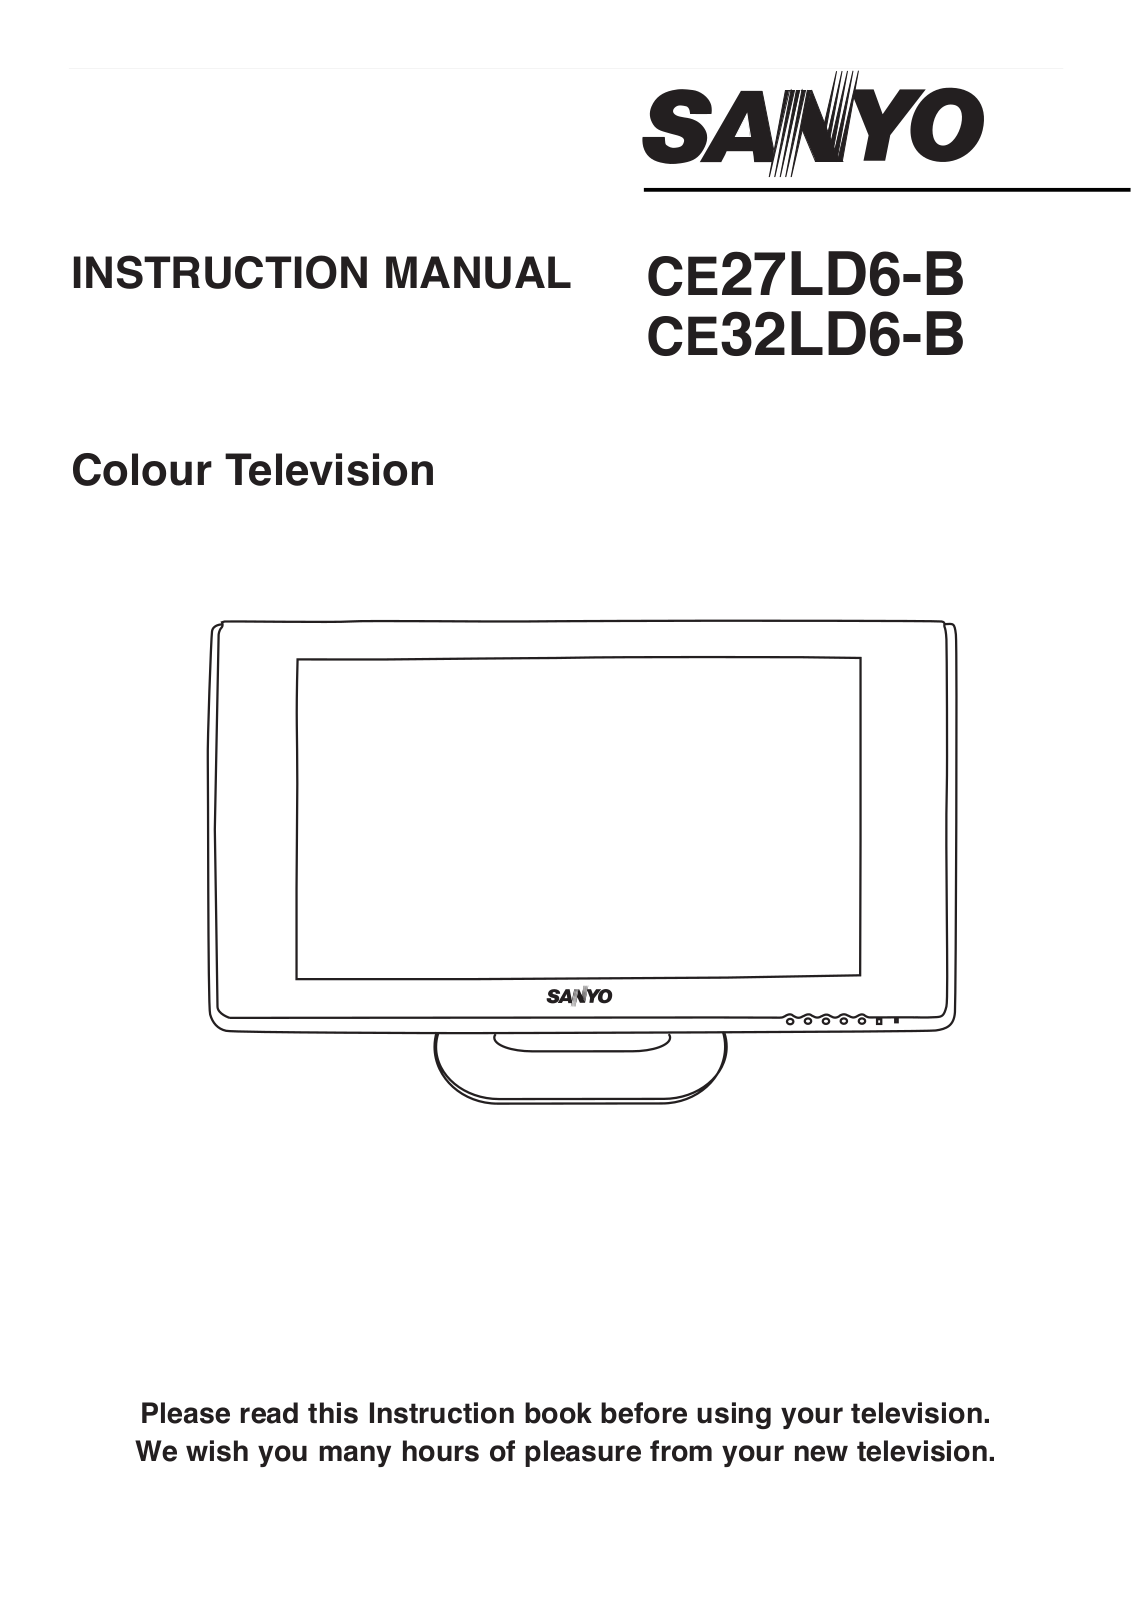 Sanyo CE27LD6-B, CE32LD6-B Instruction Manual